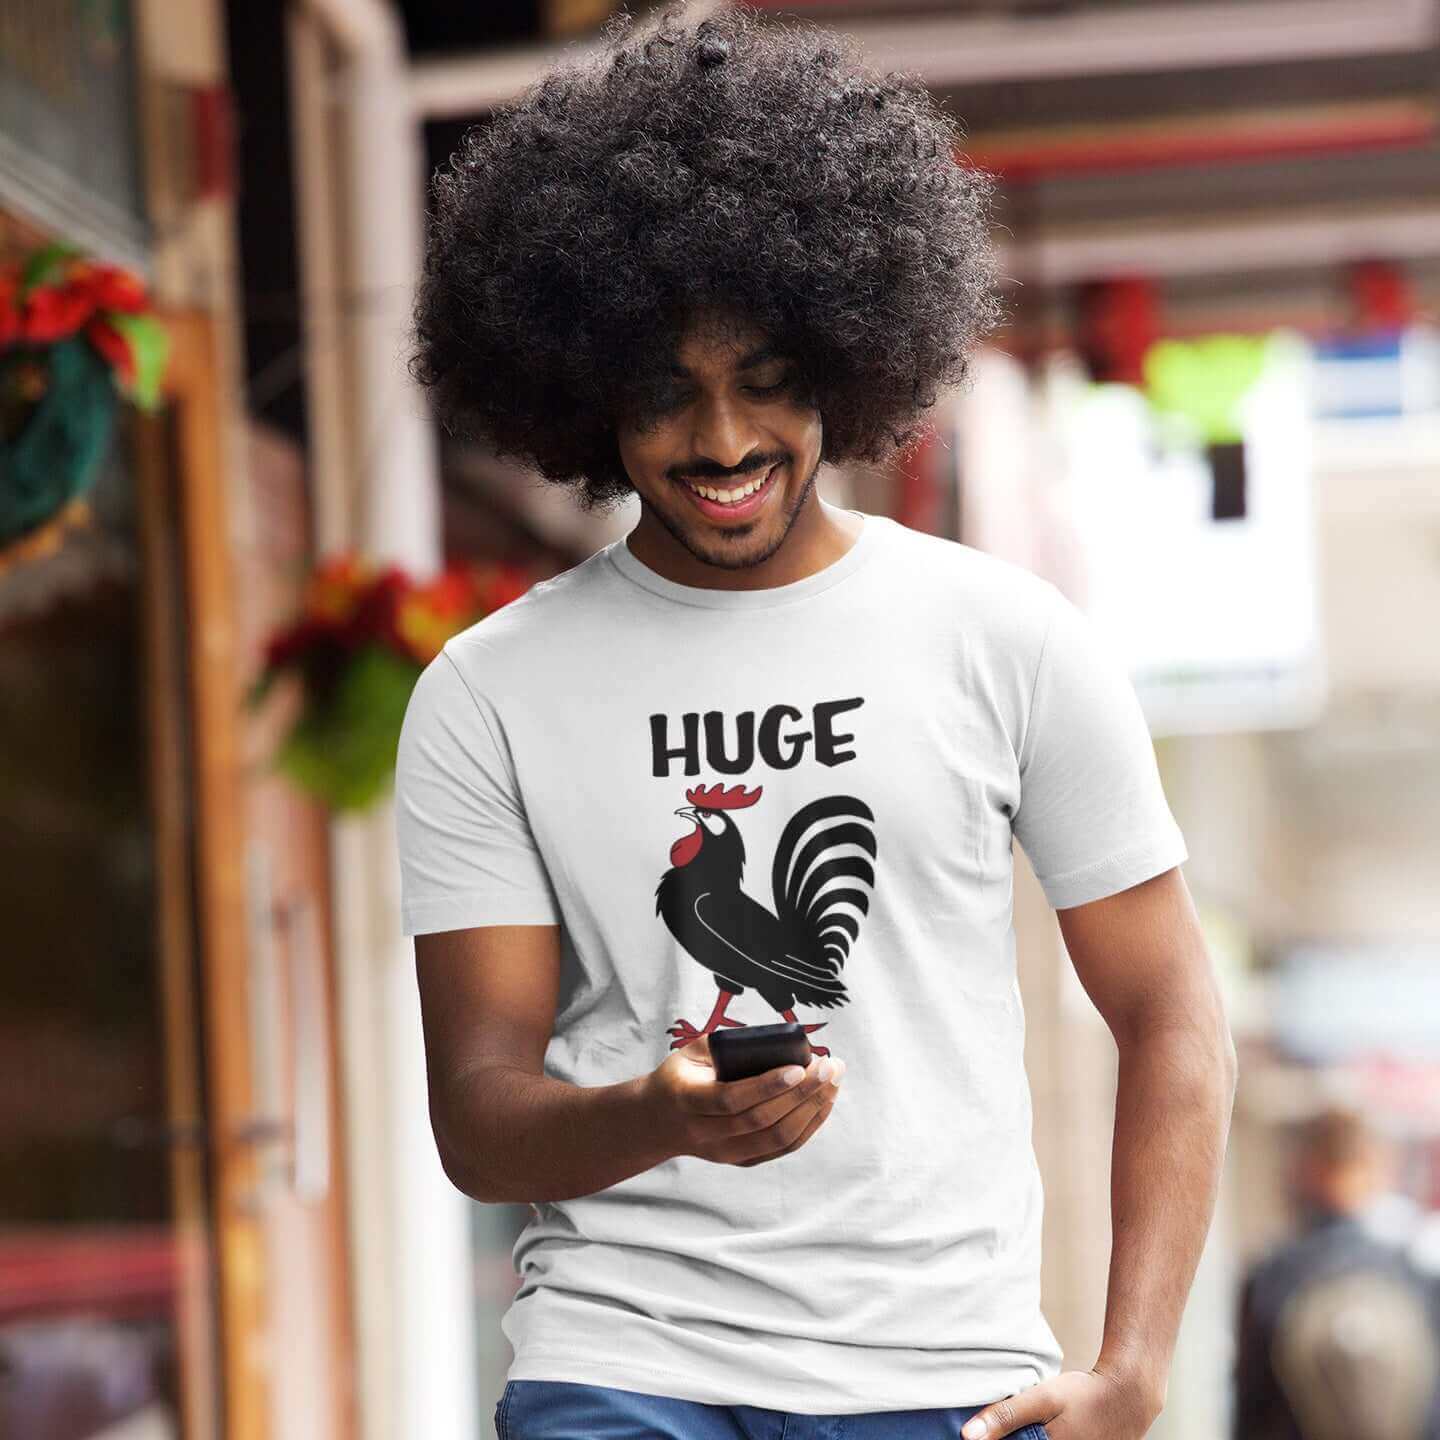 Huge rooster T-shirt